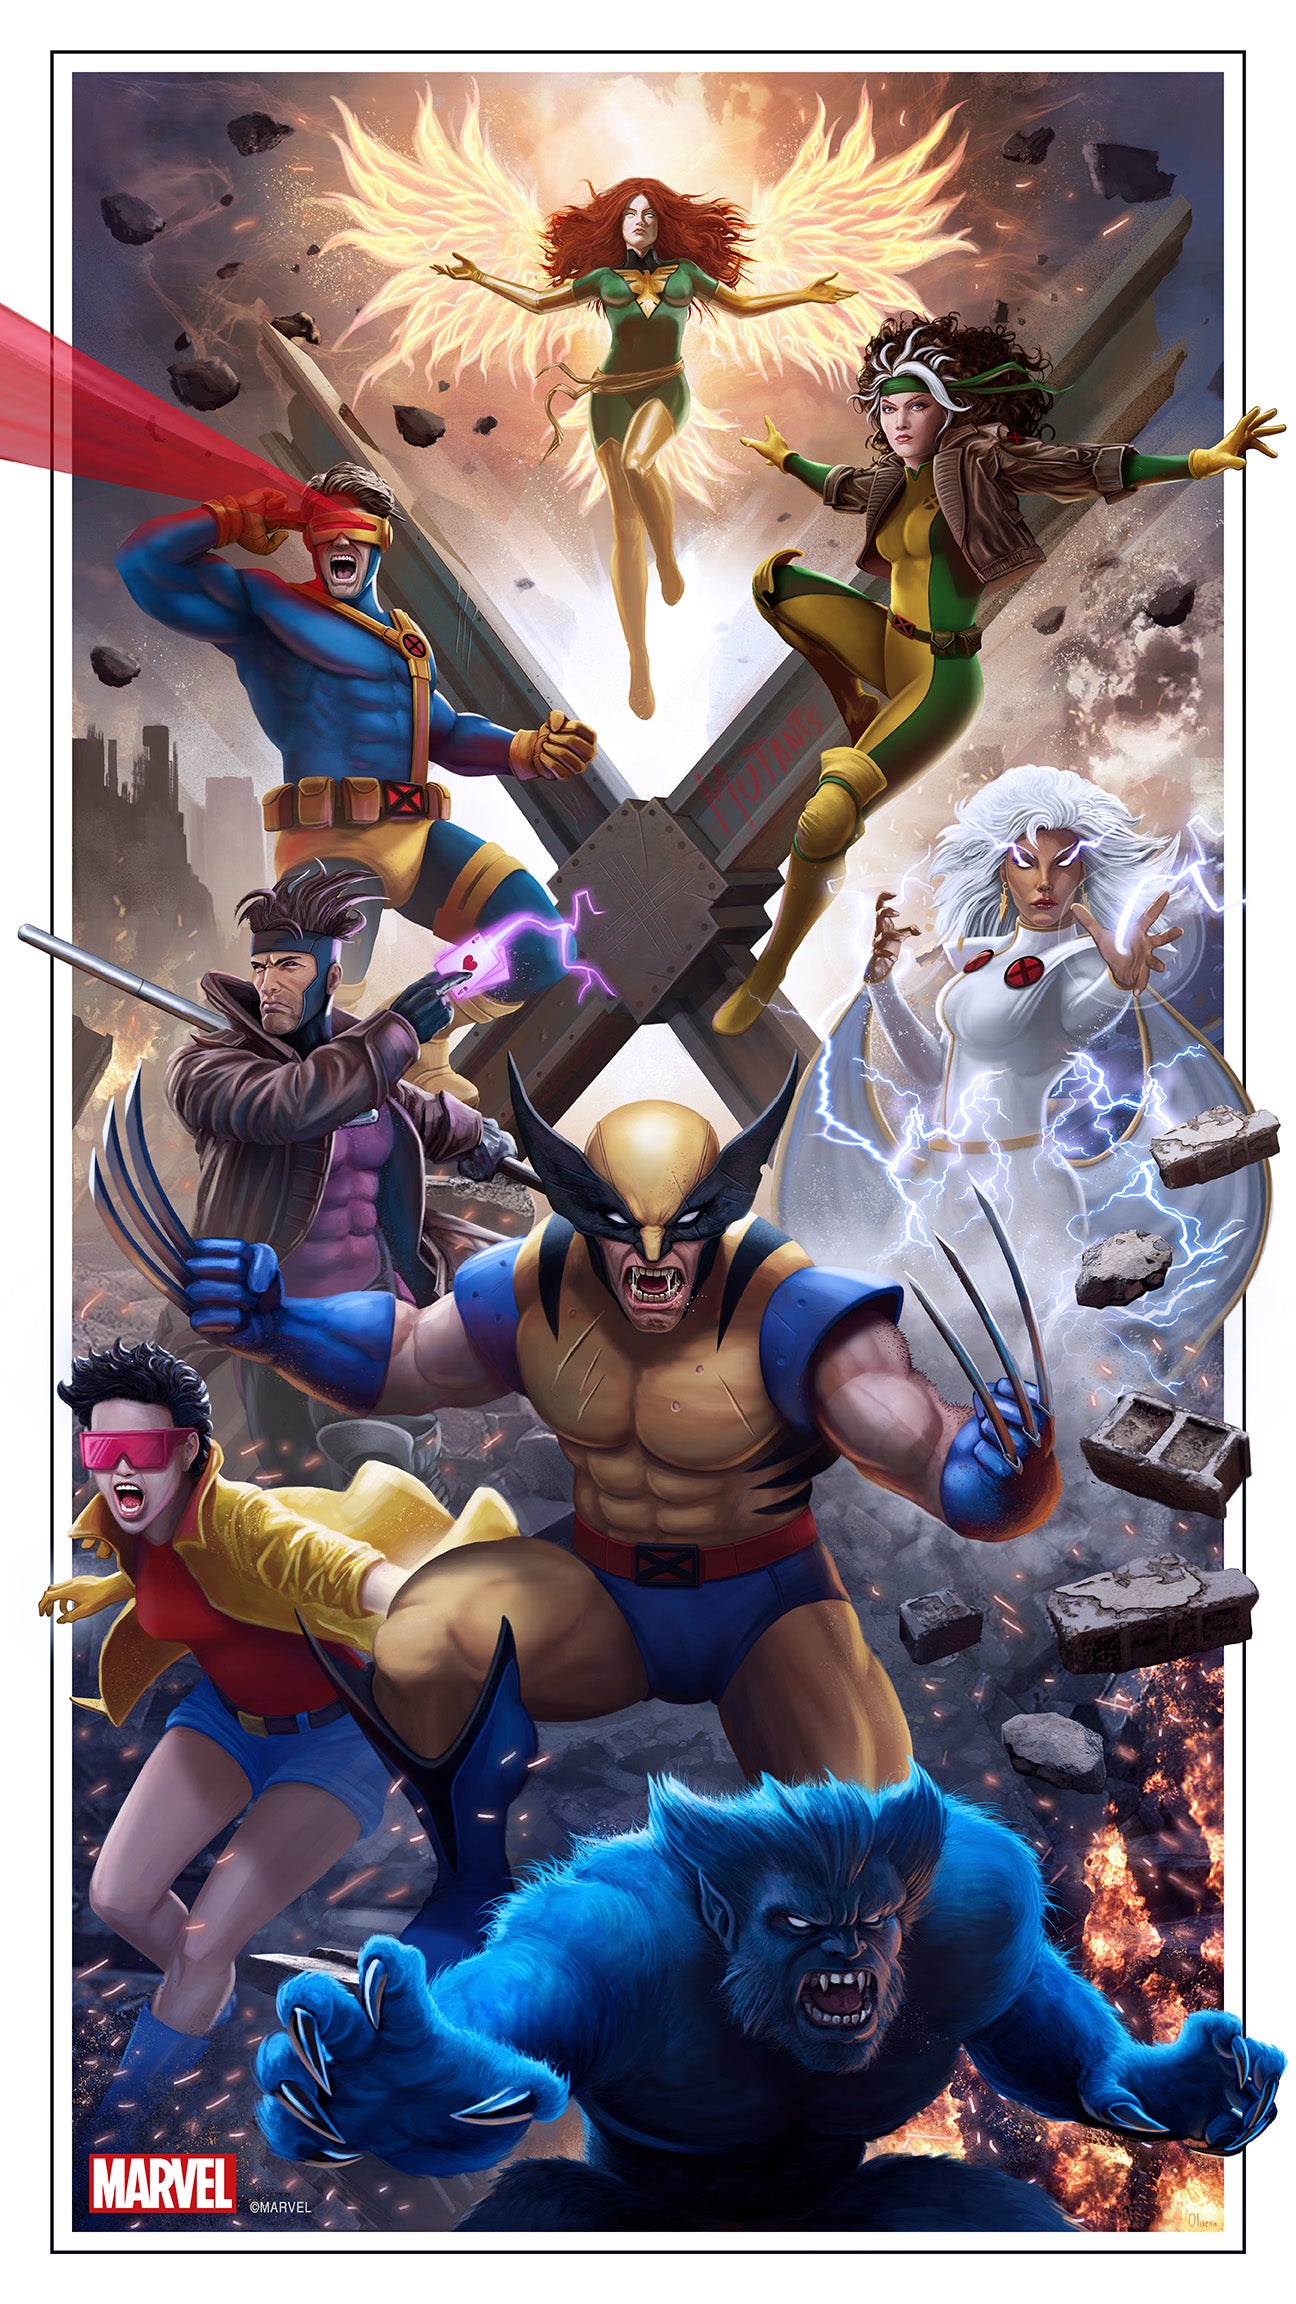 Pablo Olivera "X-Men: The Animated Series" Variant